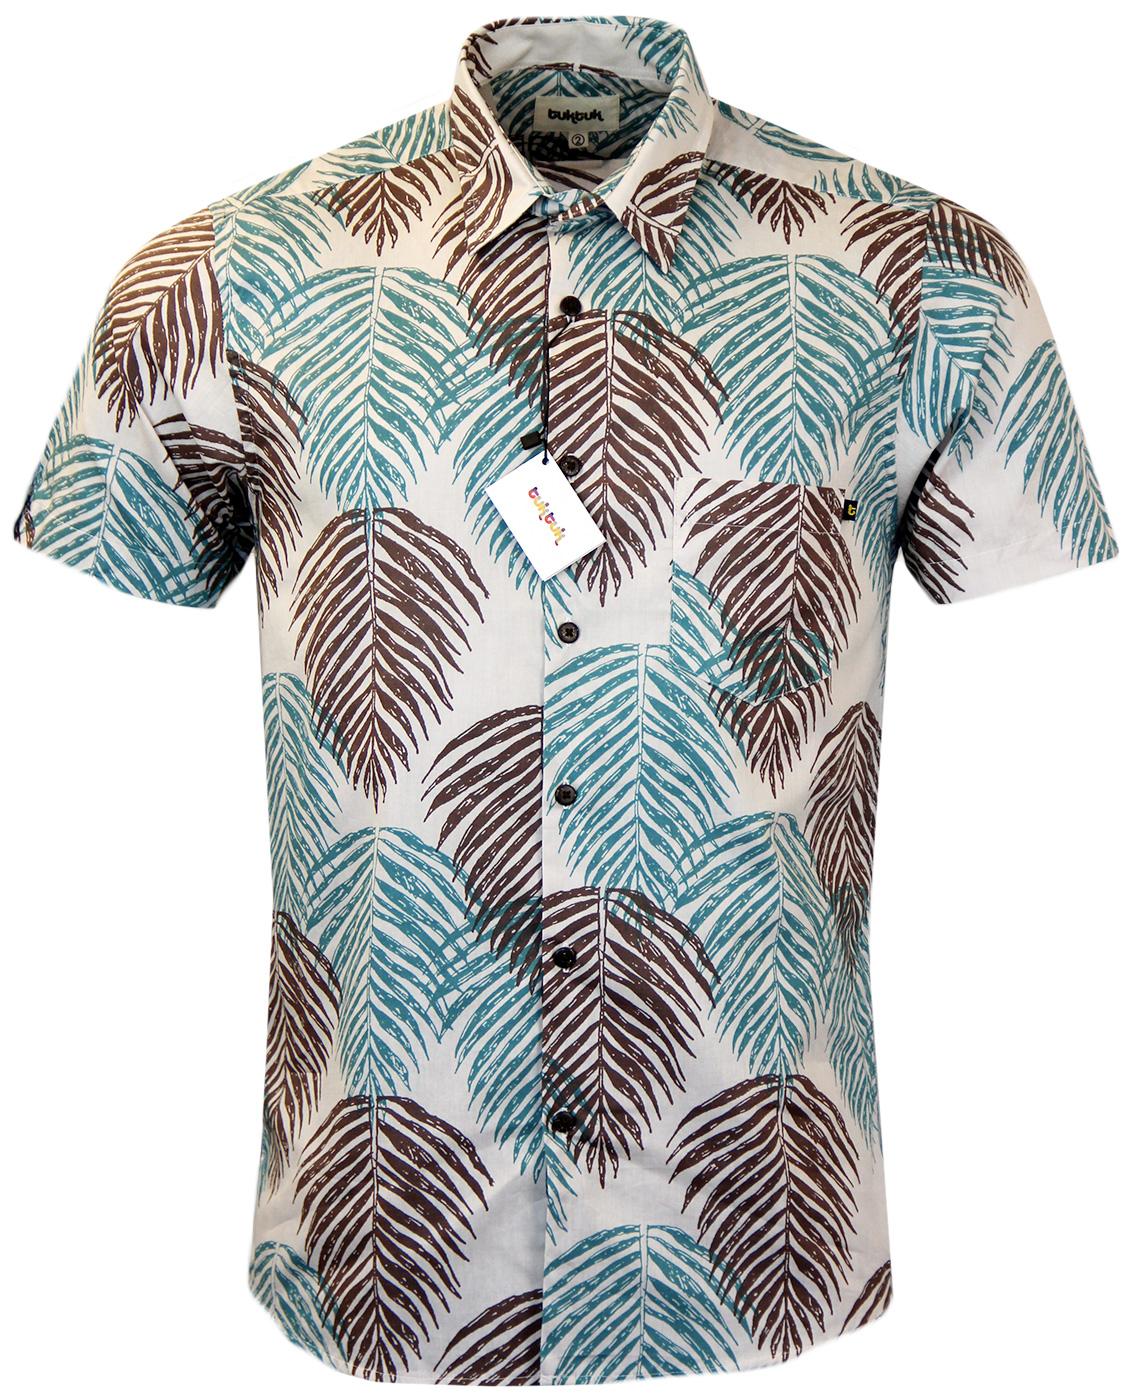 TUKTUK Retro 70s Hawaiian Palm Tree Leaf Shirt